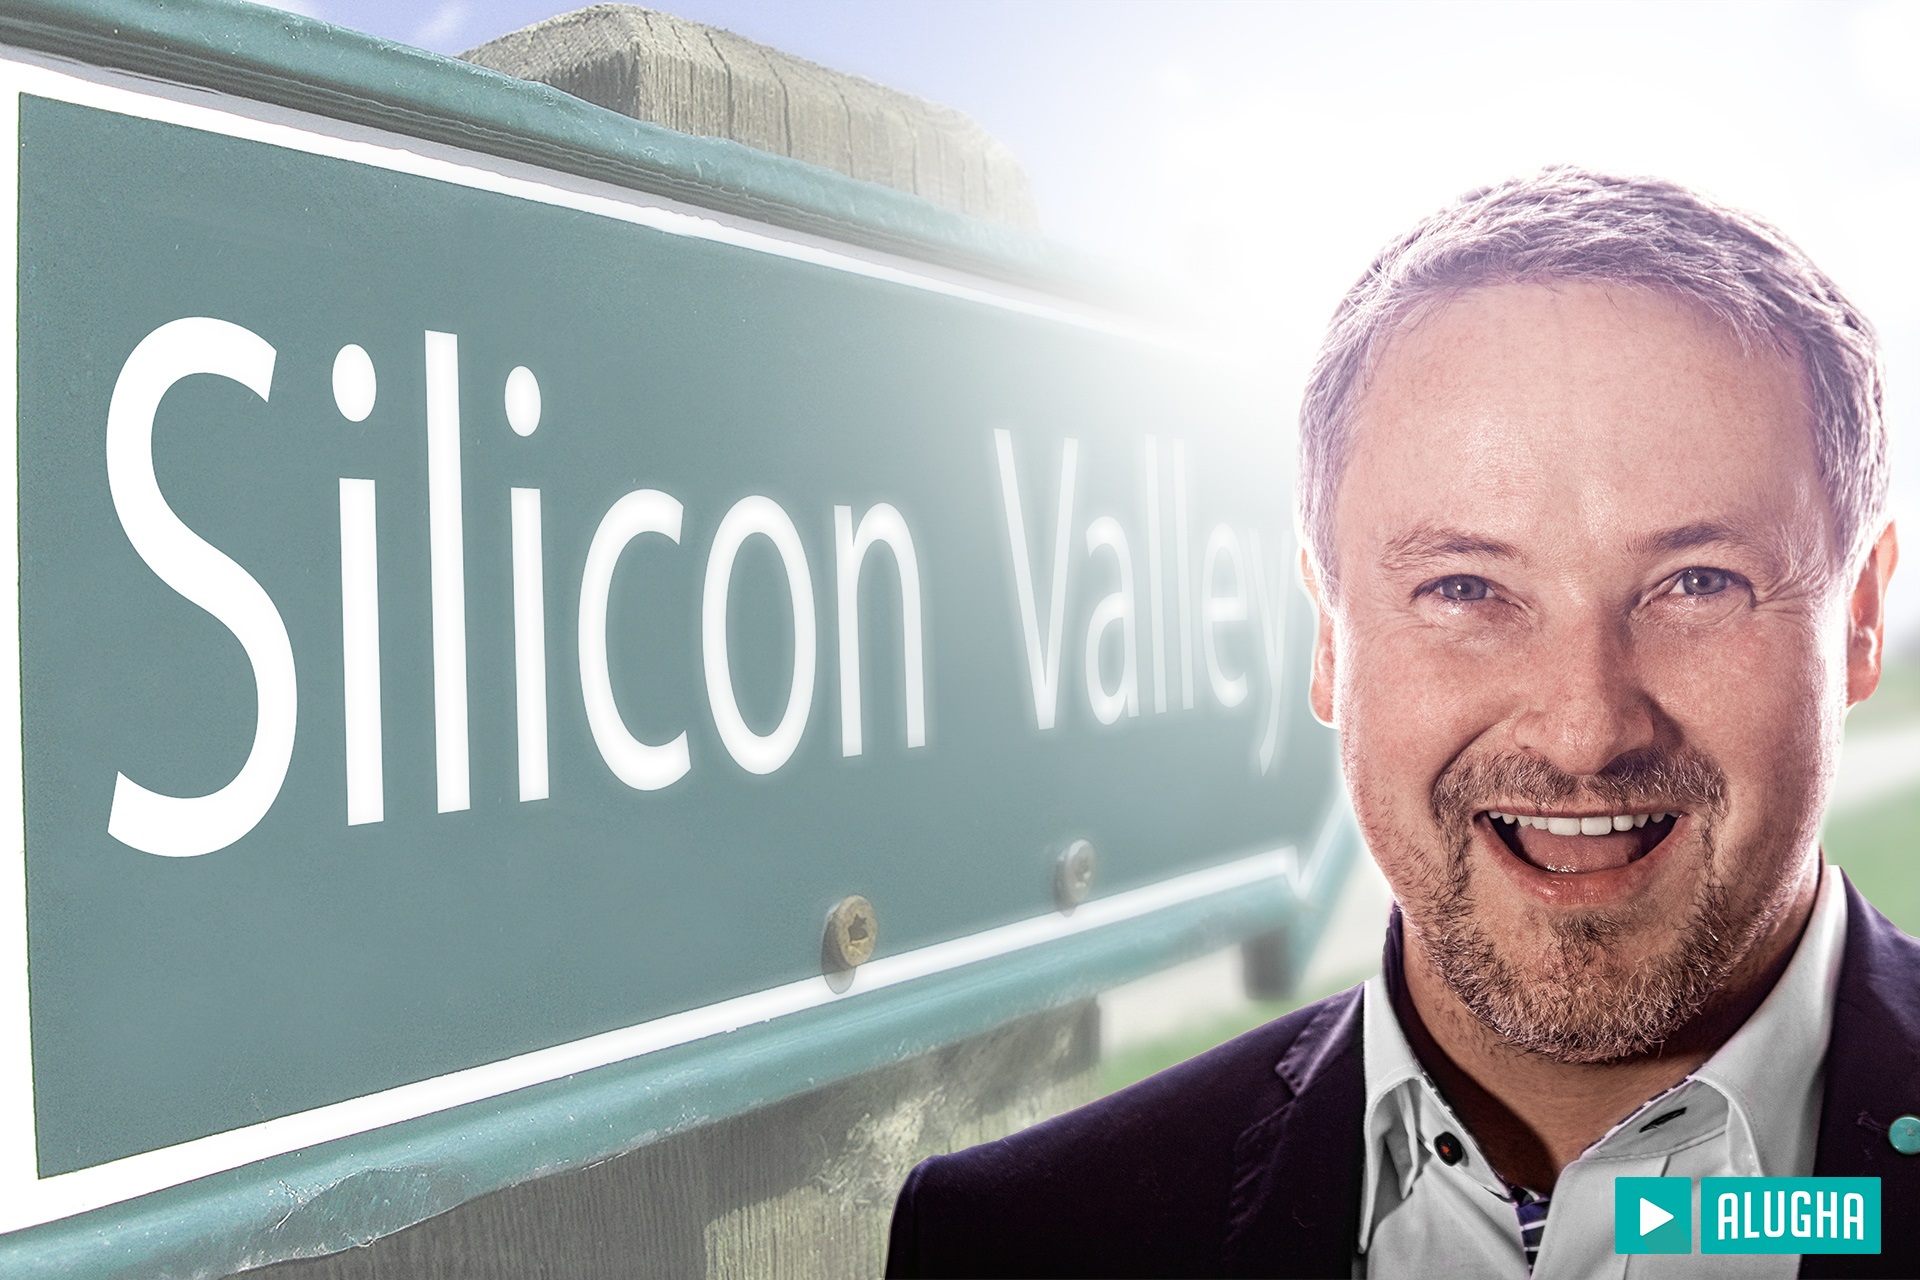 Bernd Silicon Valley